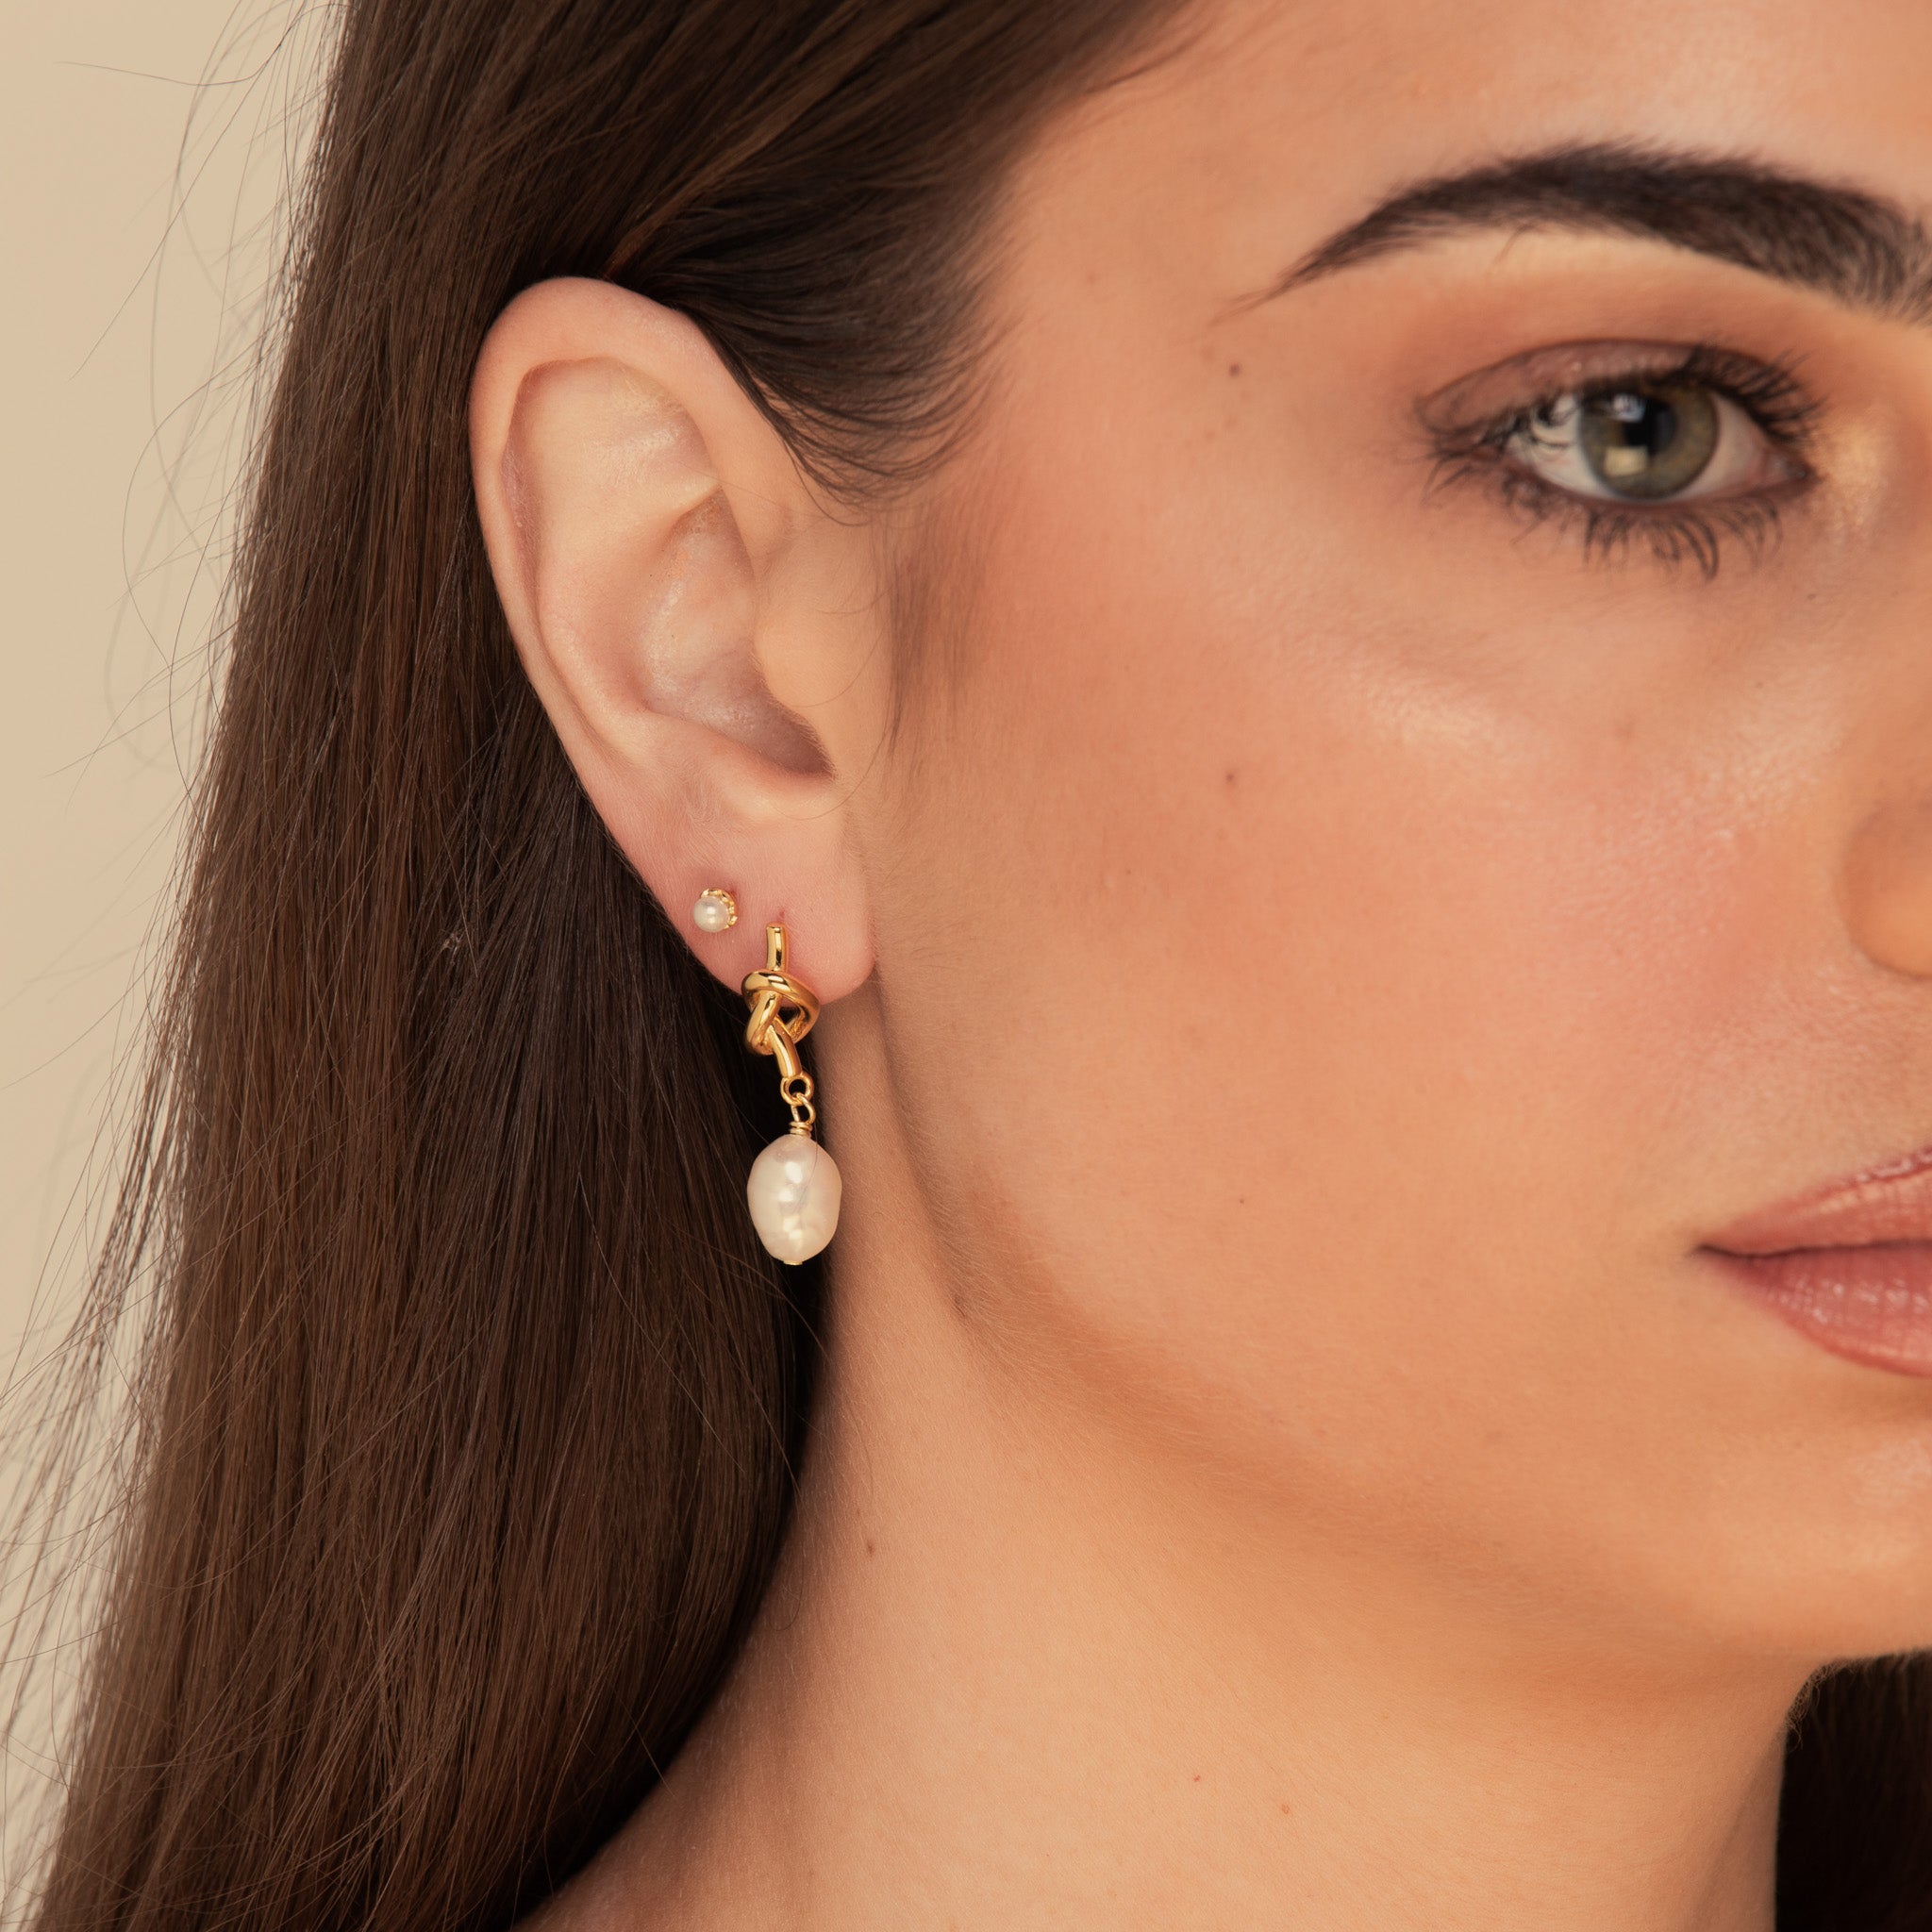 Knot Pearl Stud Earrings Gold